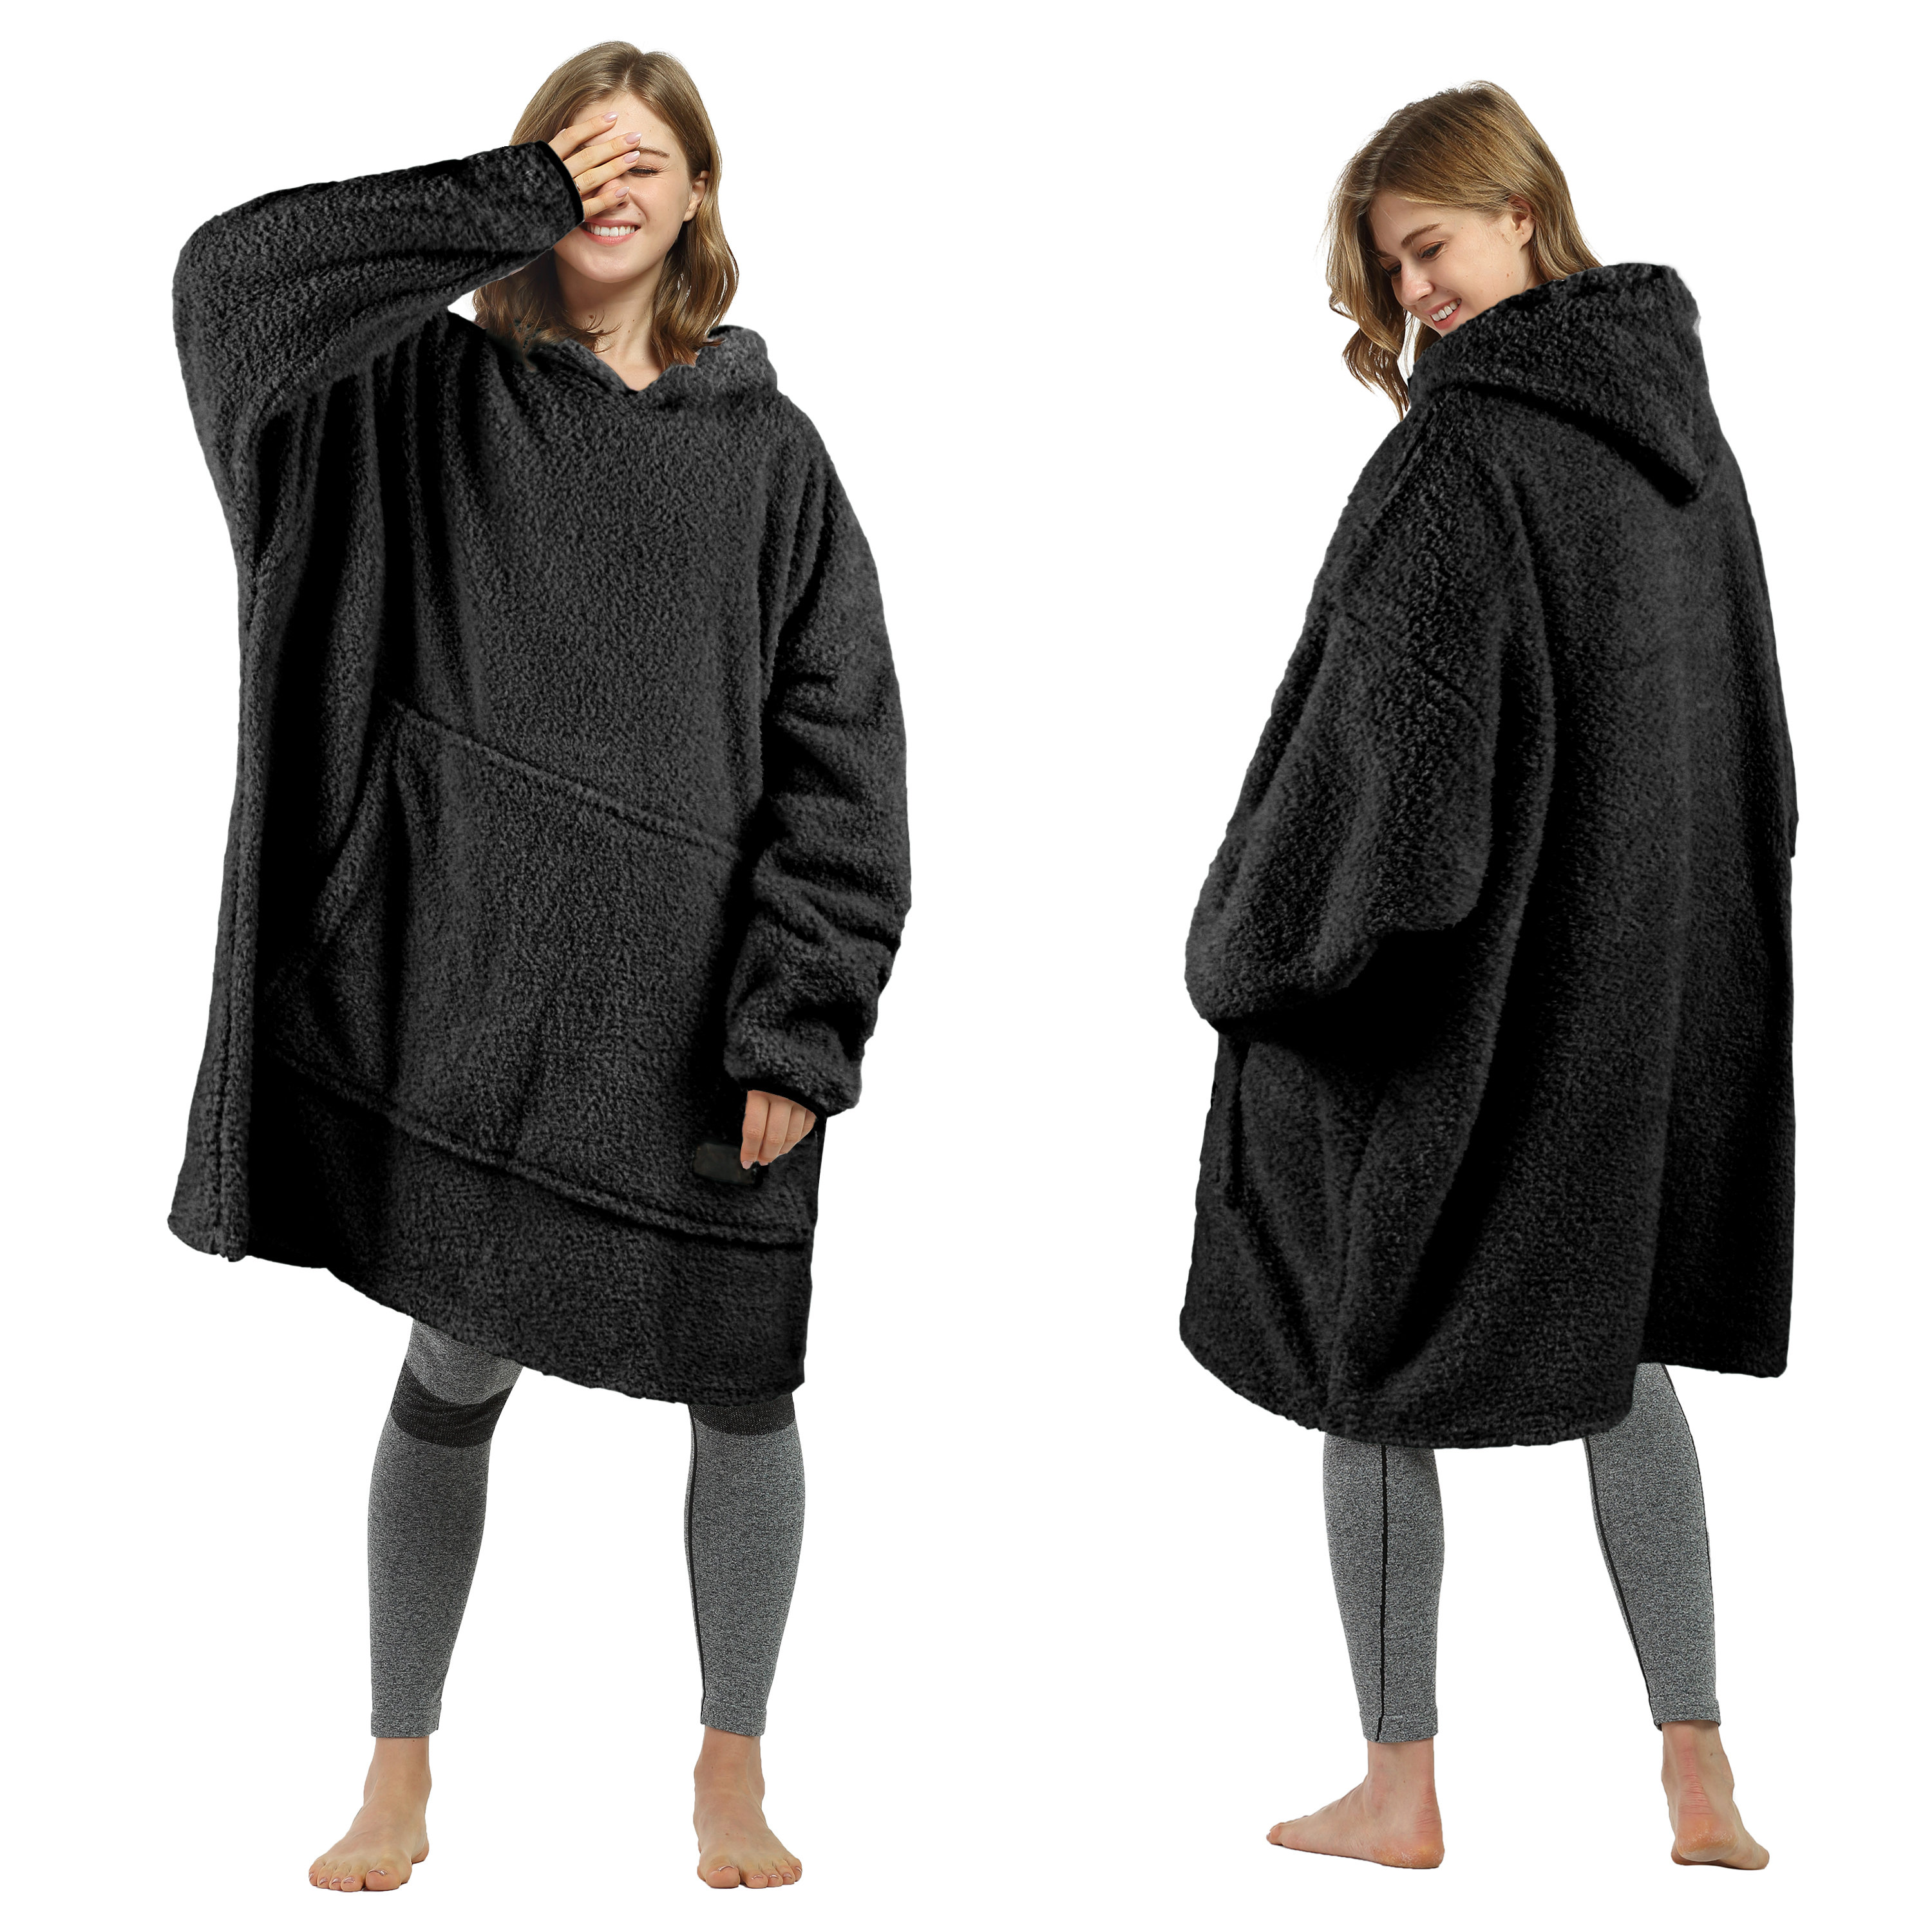 Mens Hoodies Sweatshirts Brand Camping Raincoat For Men And Women